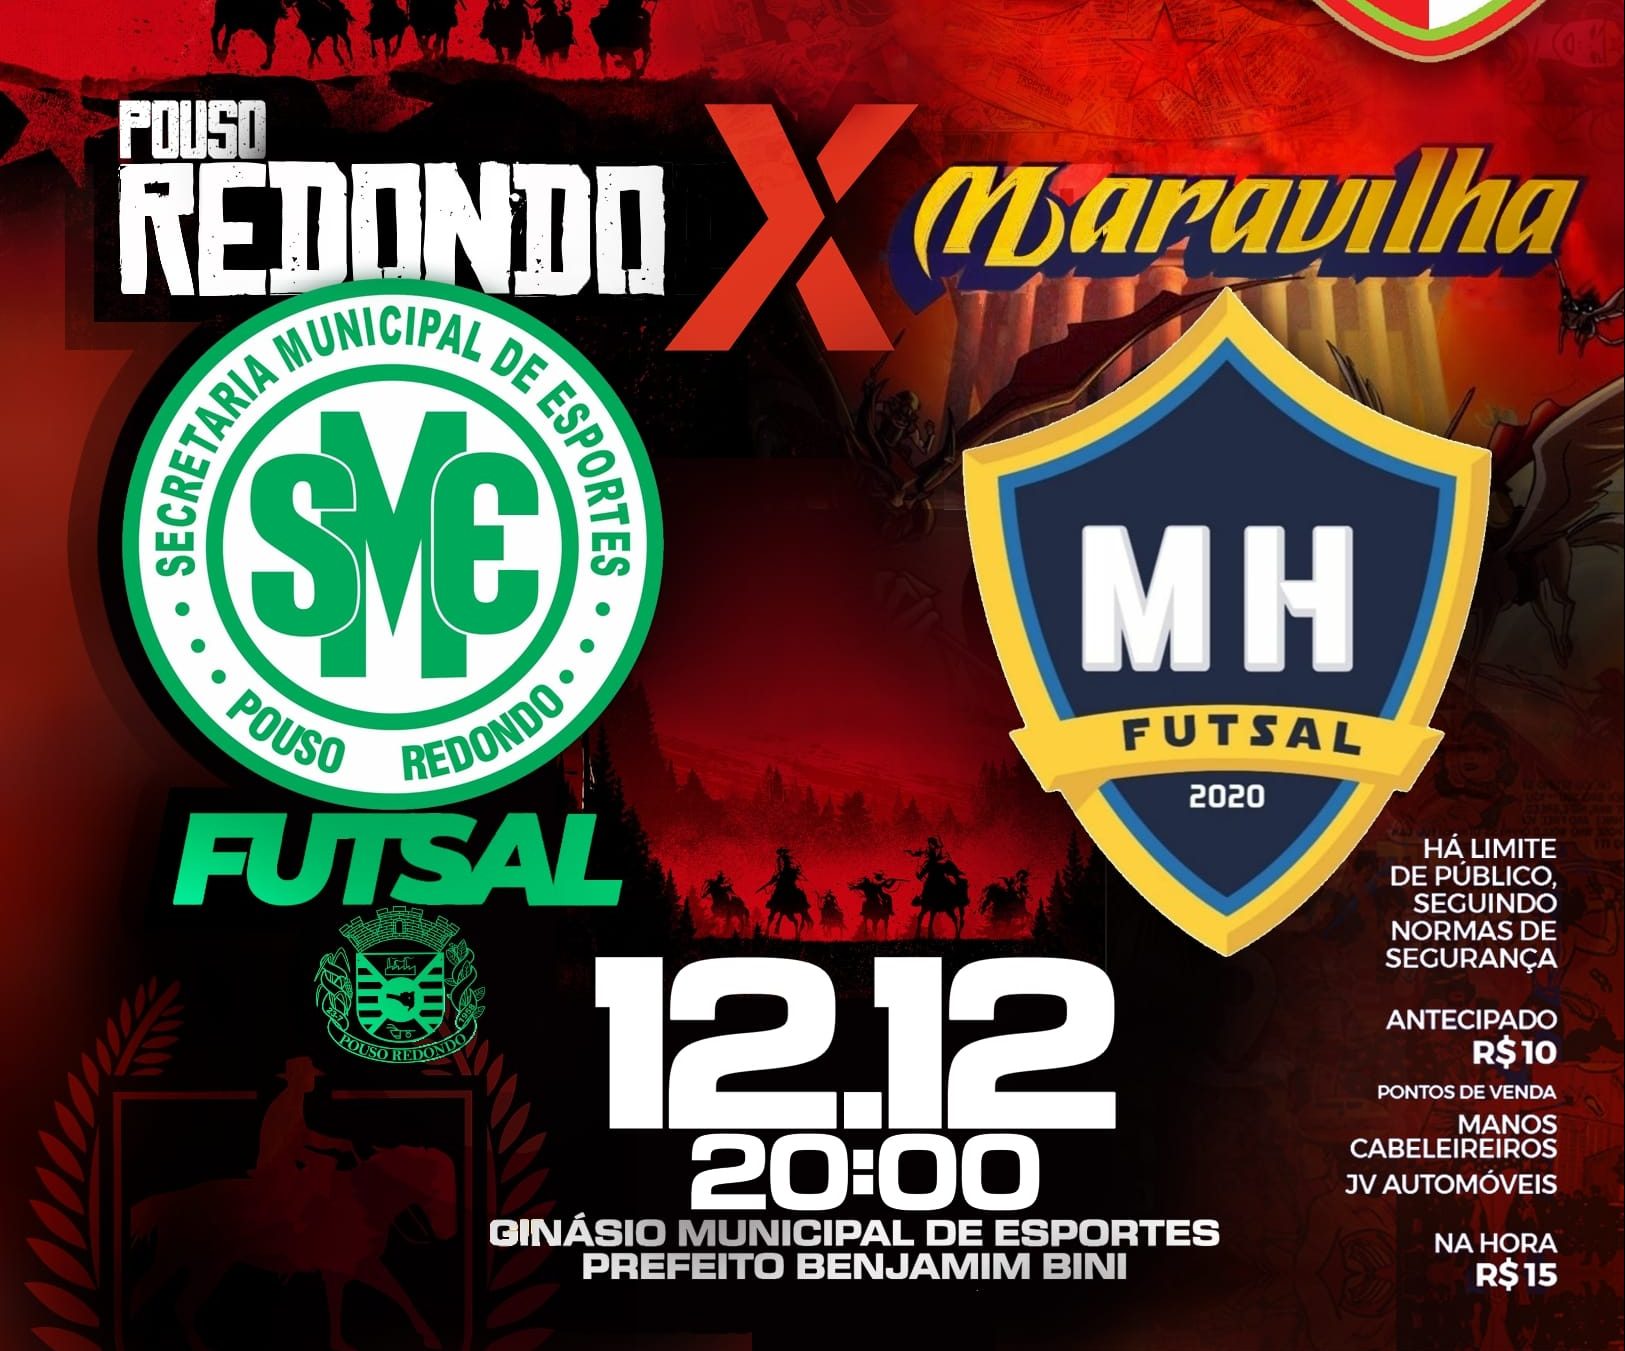 Final da Copa Catarinense de Futsal será na terça-feira (12) em Pouso Redondo